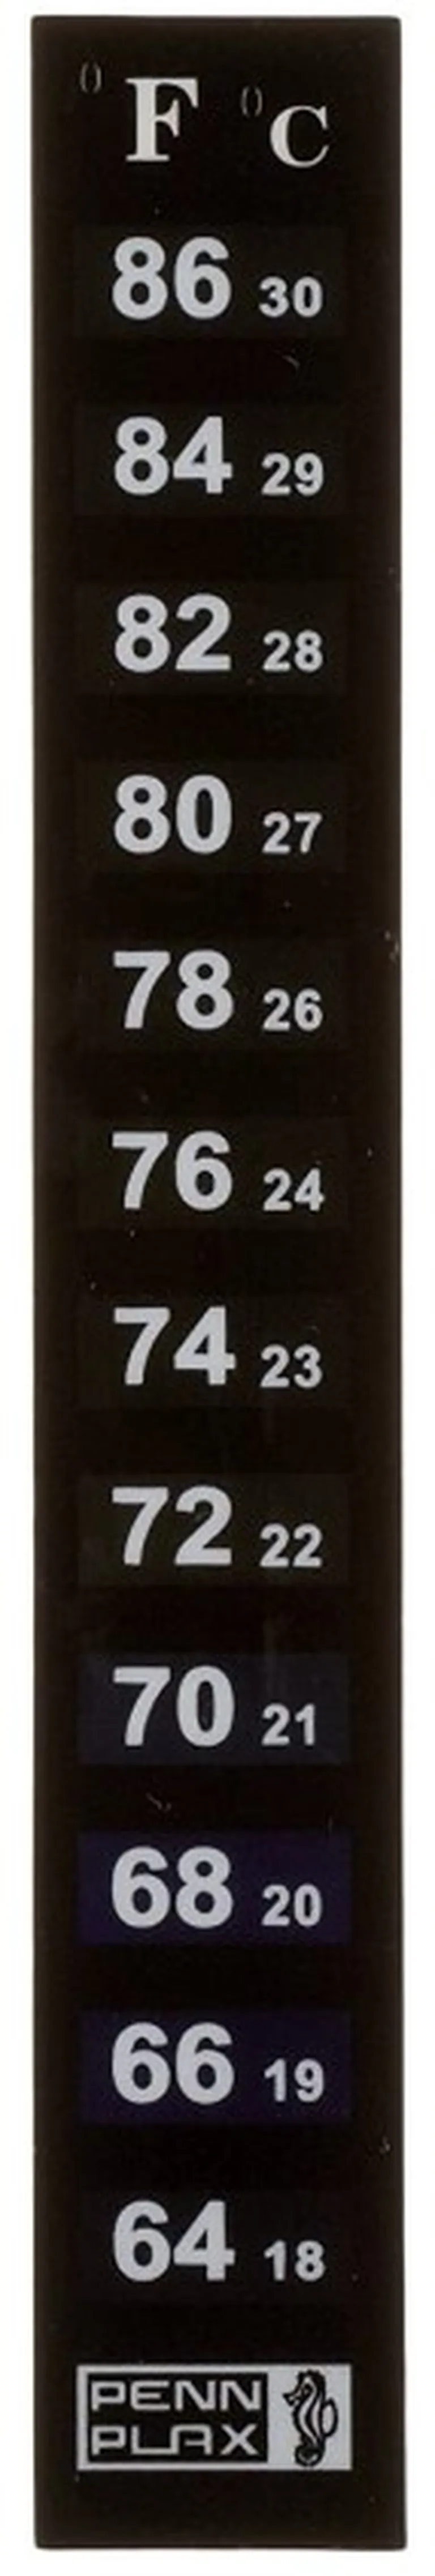 Penn Plax Therma-Temp Full-Range Digital Thermometer Photo 2